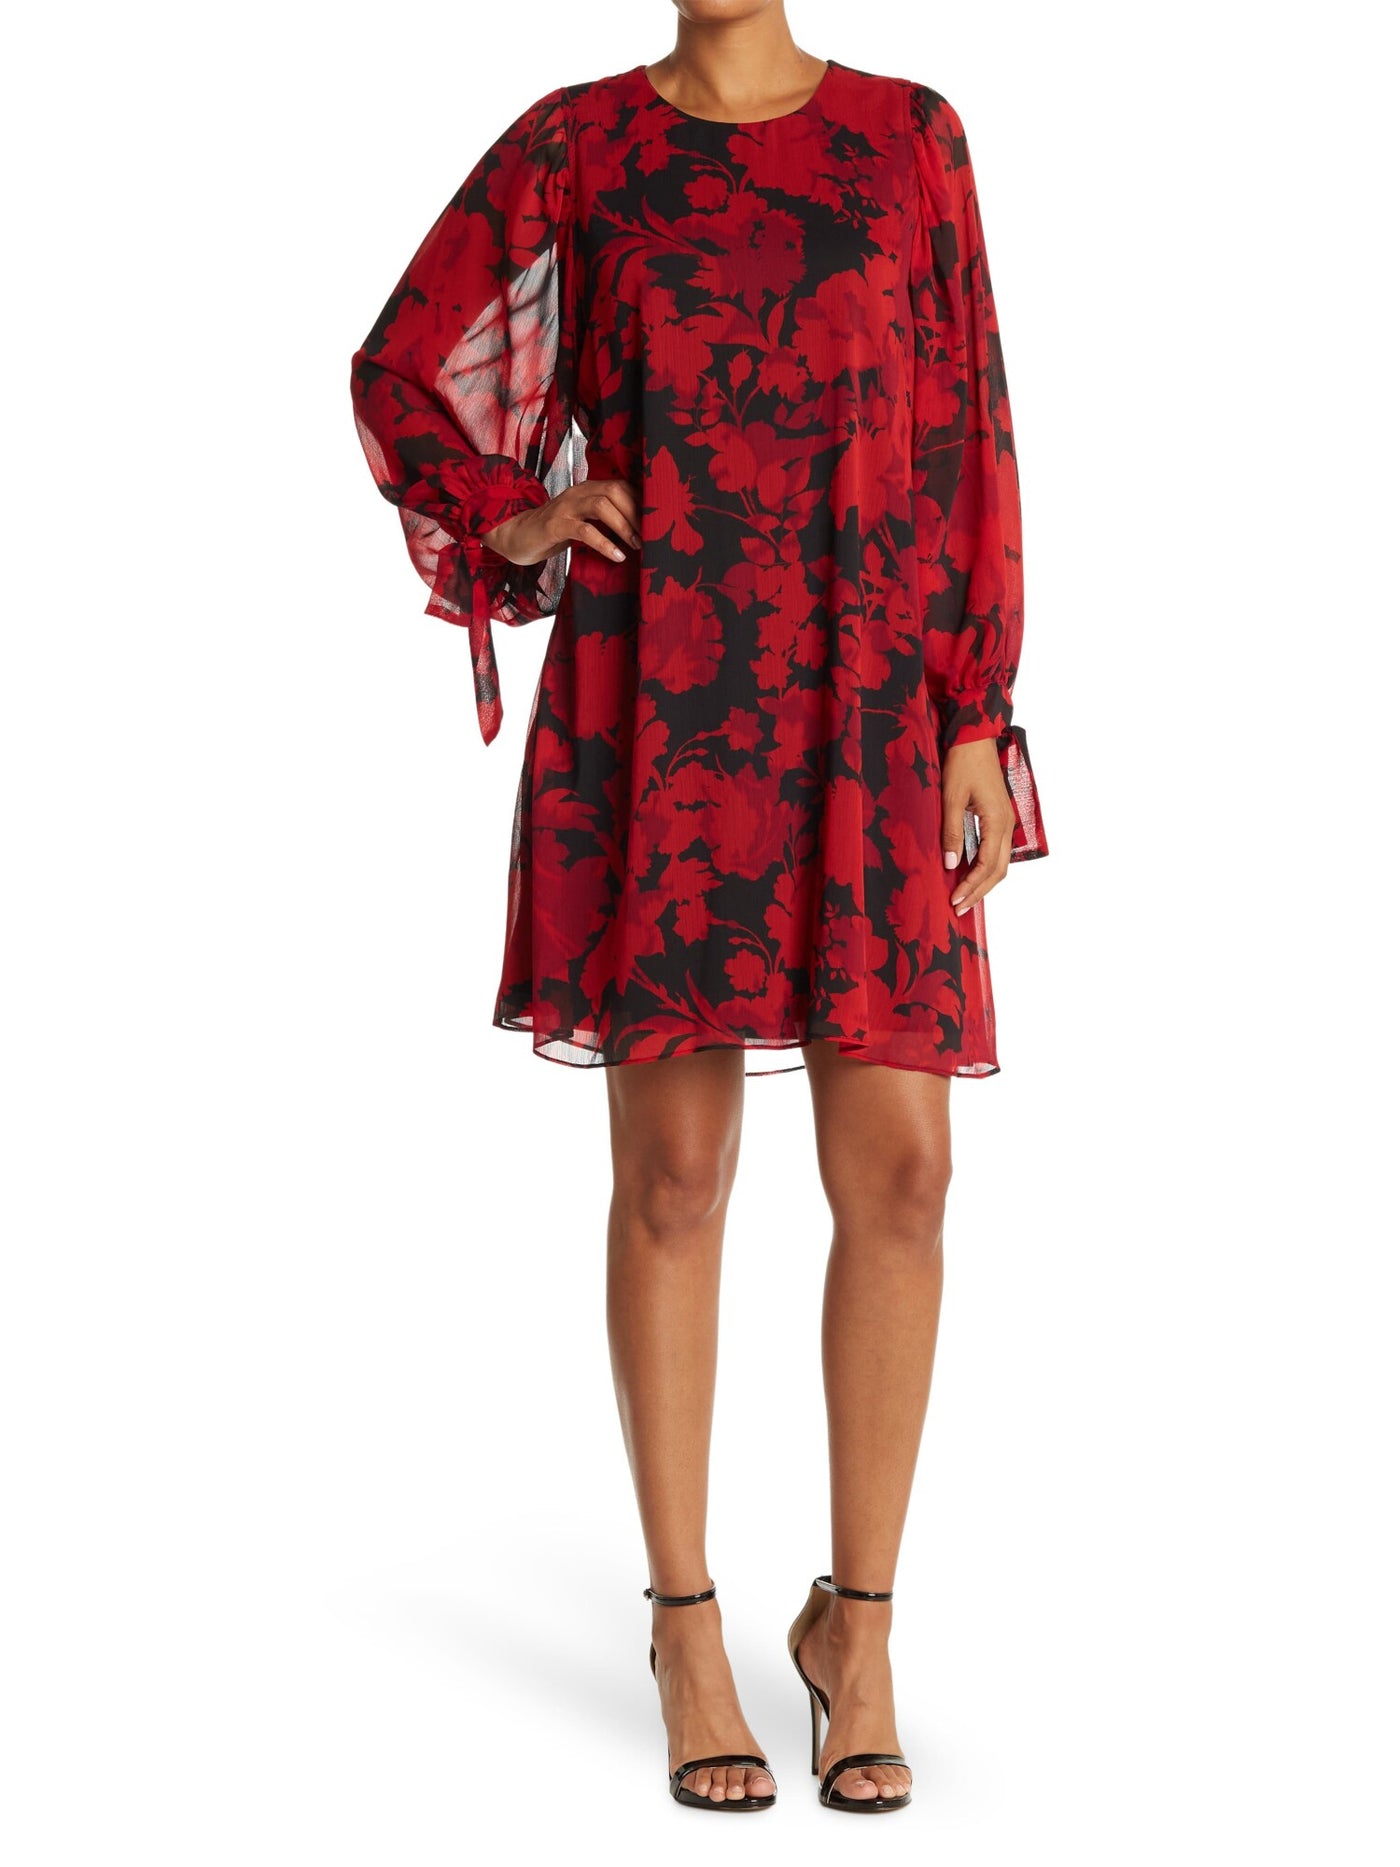 CALVIN KLEIN Womens Red Sheer Ruffled Floral Long Sleeve Jewel Neck Short Cocktail Shift Dress 2